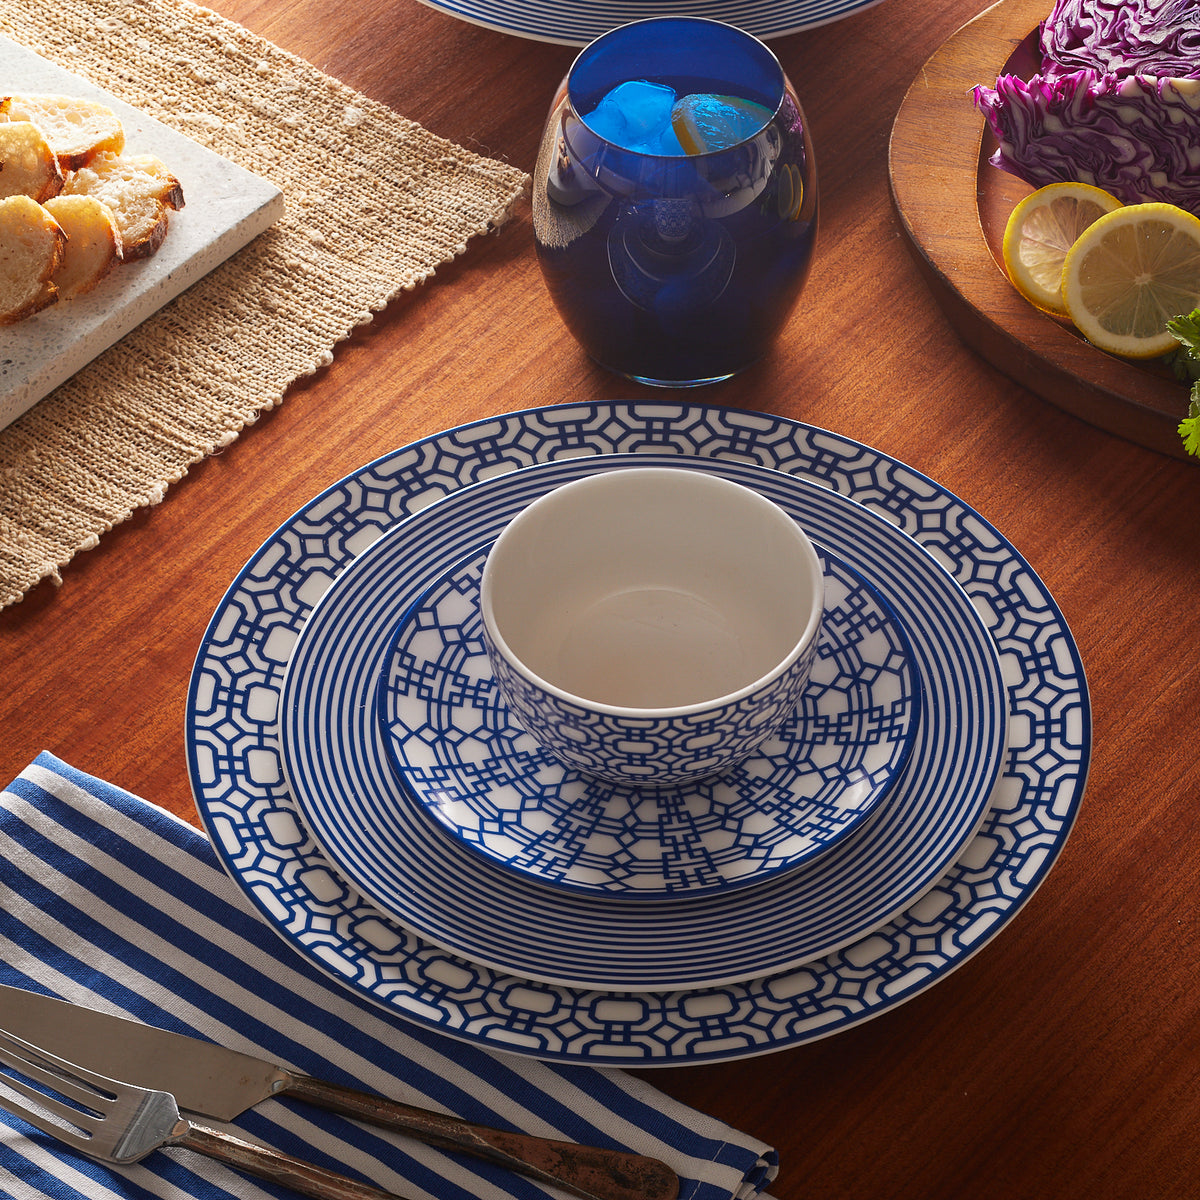 A Newport Garden Gate Blue Rimmed Dinner Plate from Caskata Artisanal Home, with a contemporary note.